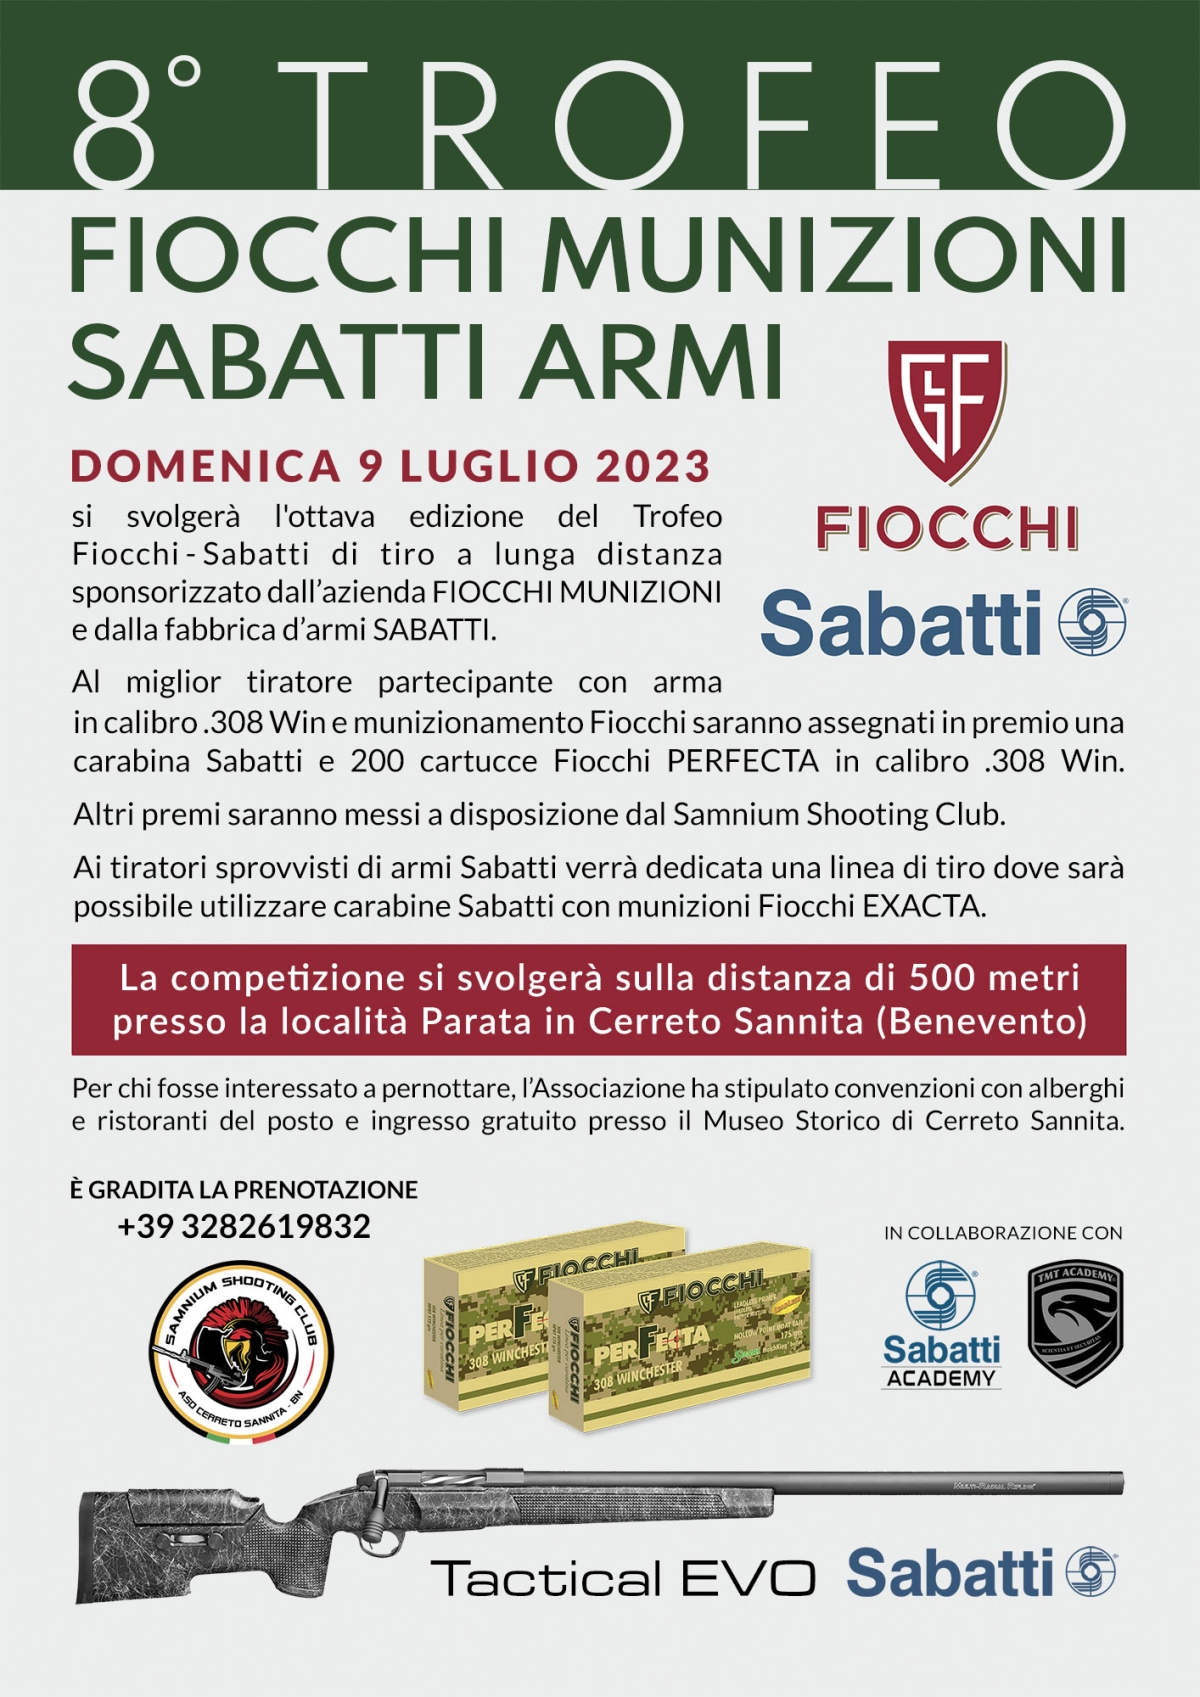 Tiro a lunga distanza: Trofeo Fiocchi-Sabatti 2023